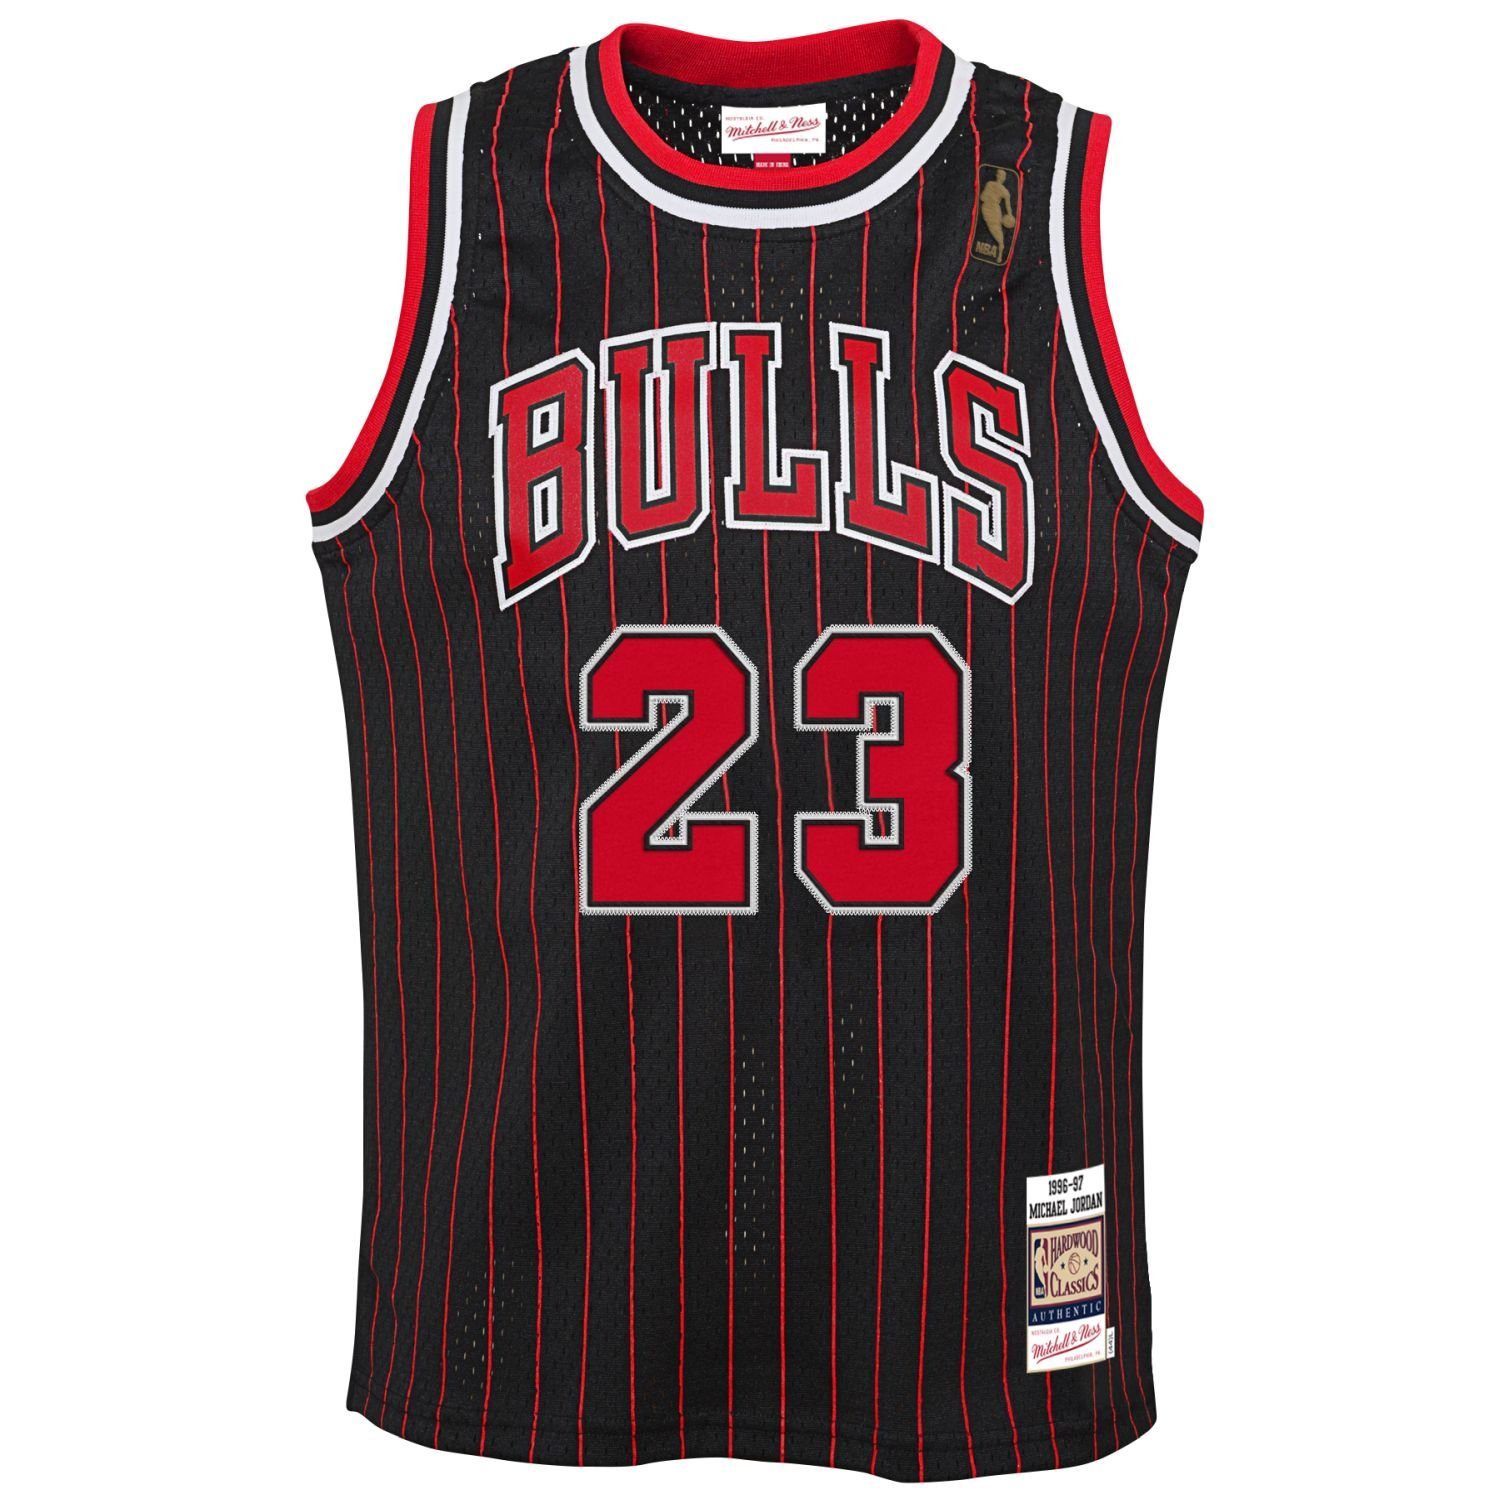 Mitchell & Ness Print-Shirt Authentic Jersey Chicago Bulls 1996 Michael Jorda